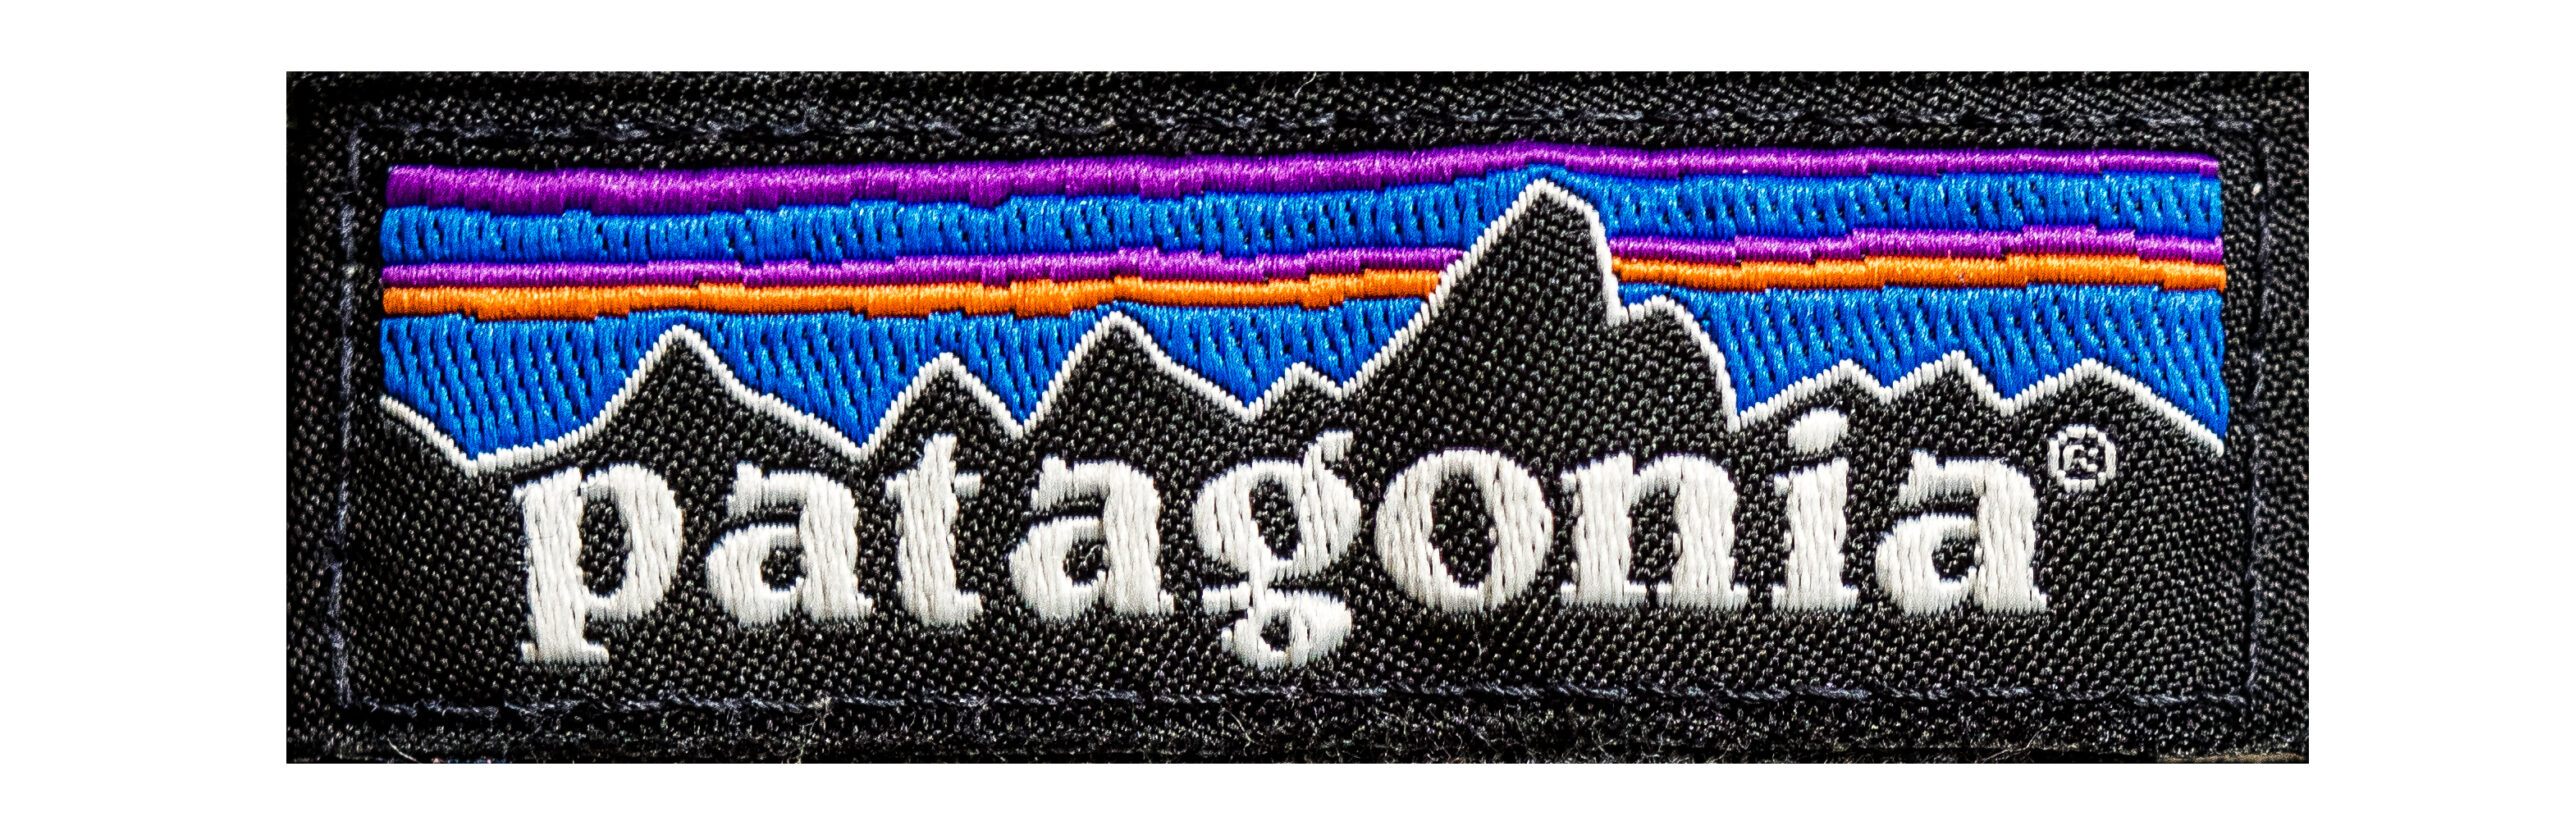 Patagonia Label (photo: ajay_suresh CC BY 2.0 via Flickr)